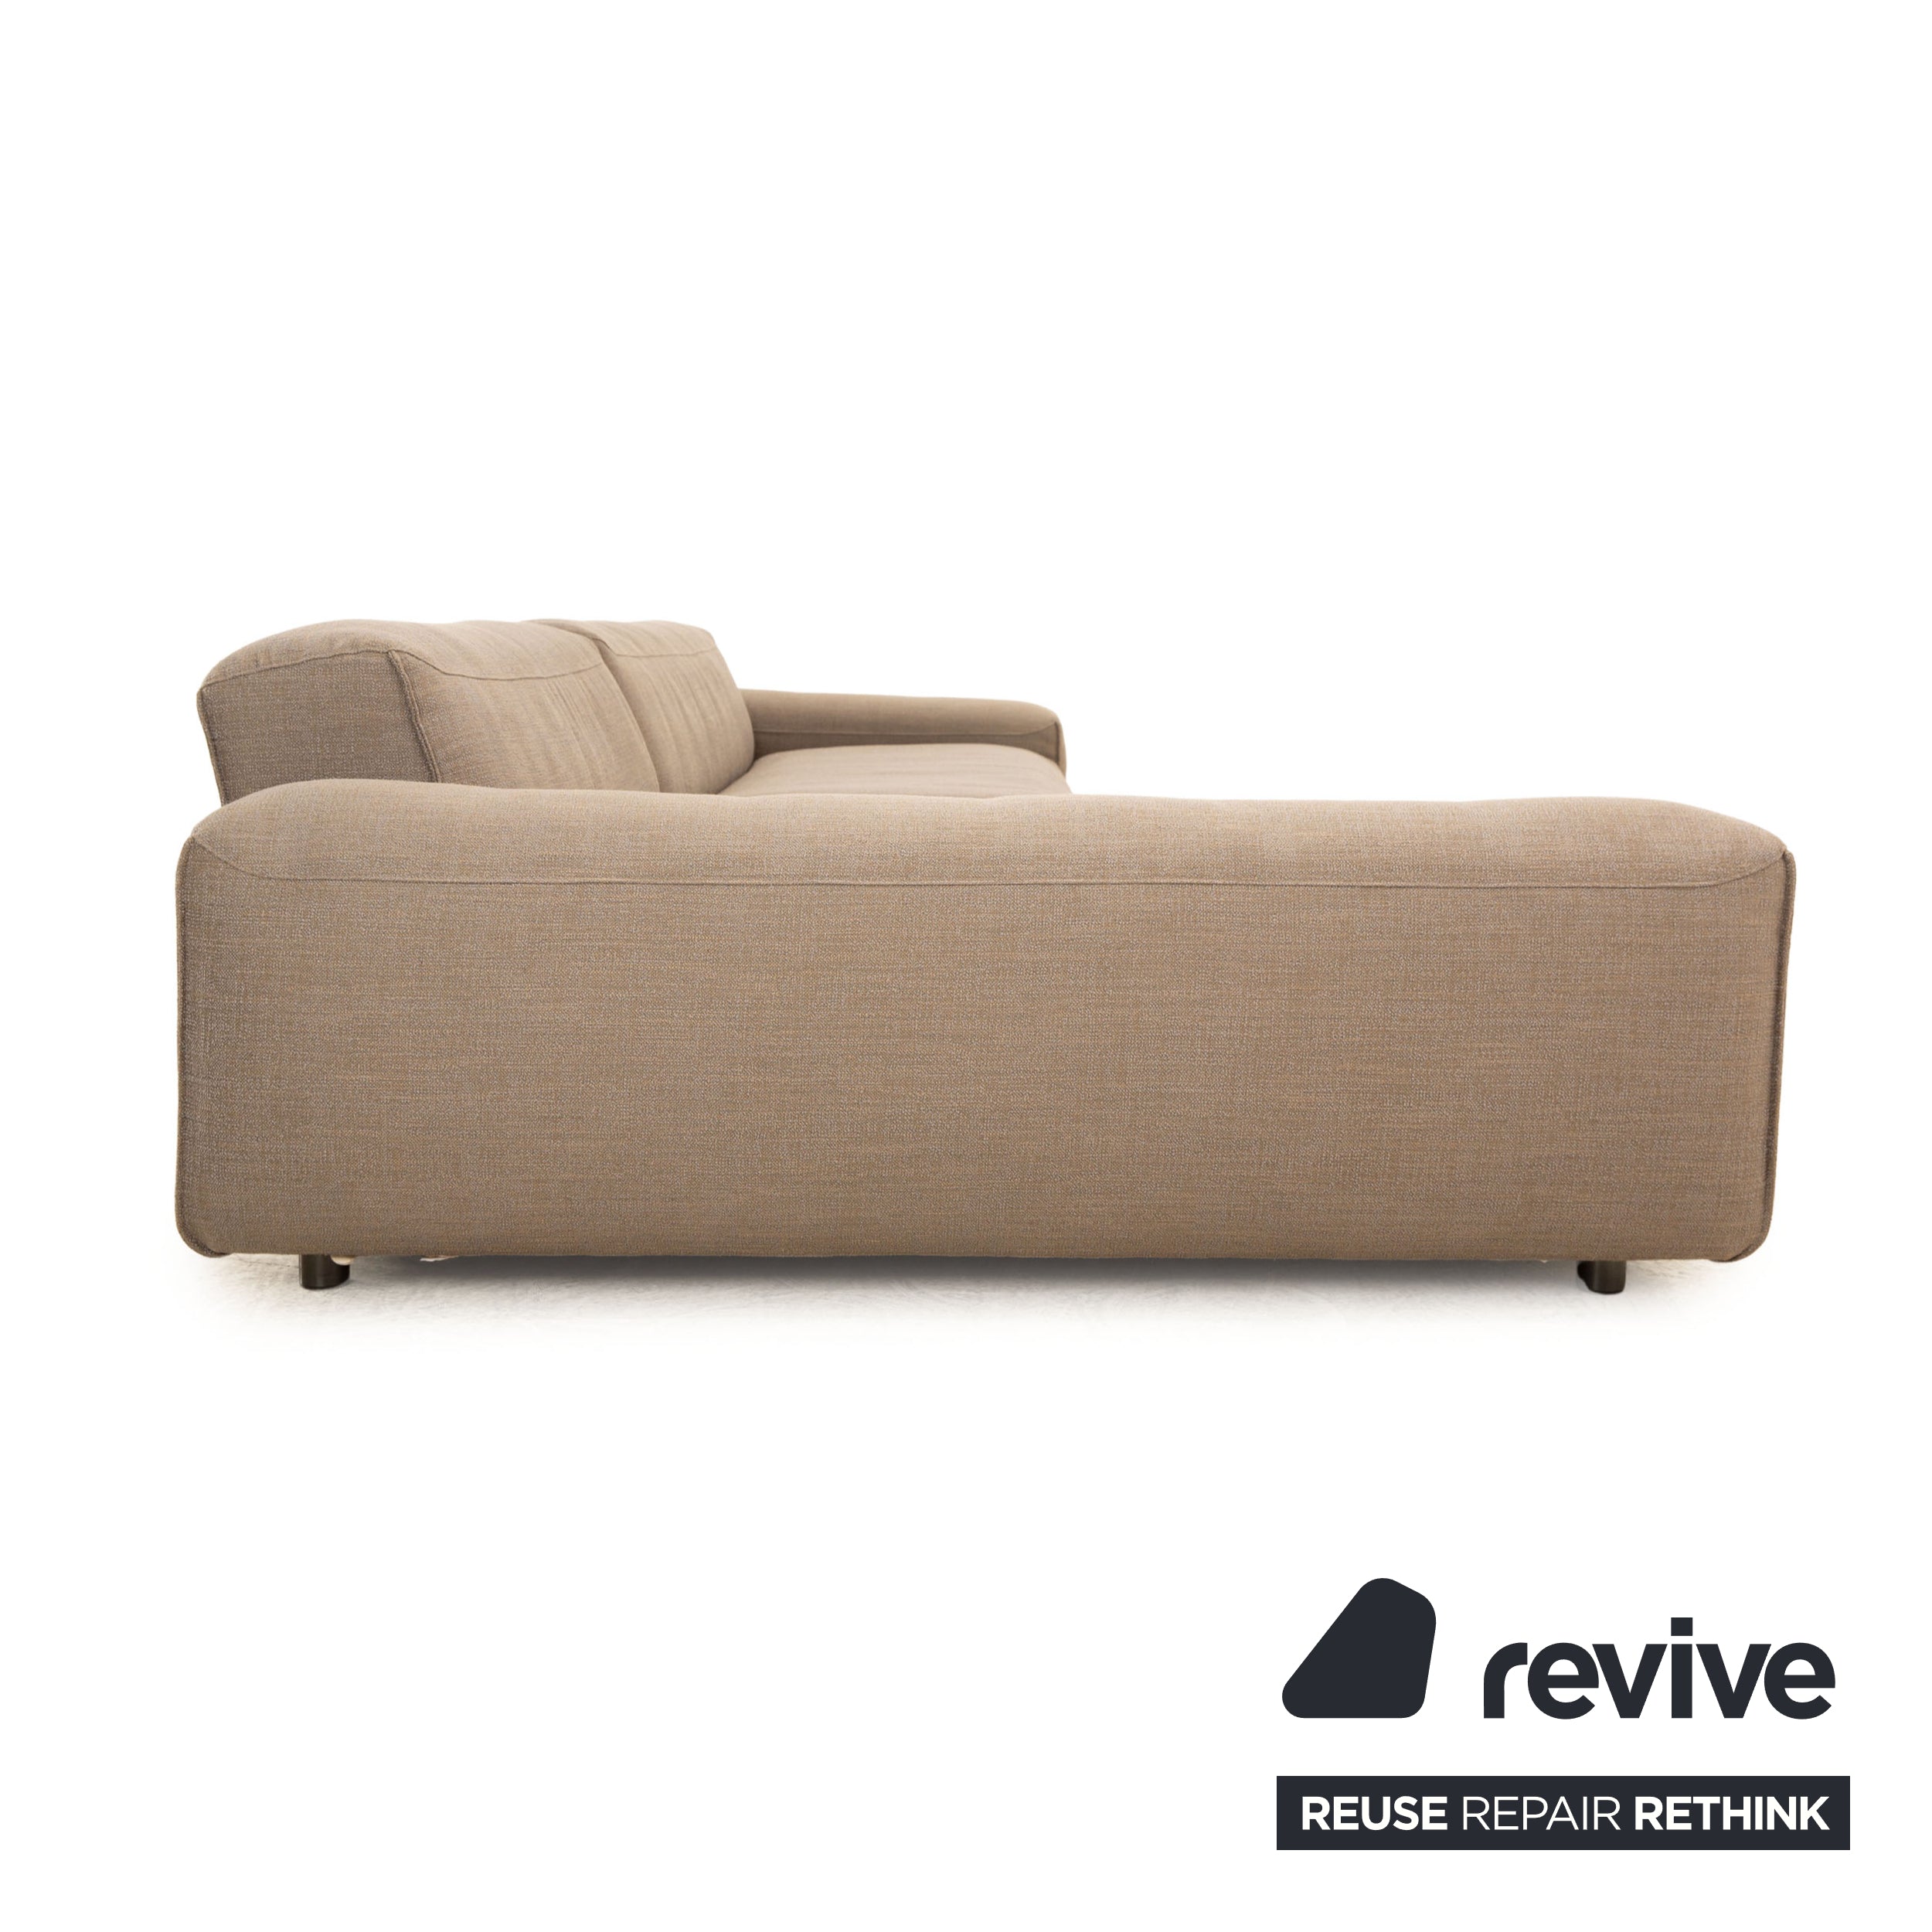 Rolf Benz Mio Fabric Corner Sofa Gray Recamiere Left Sofa Couch